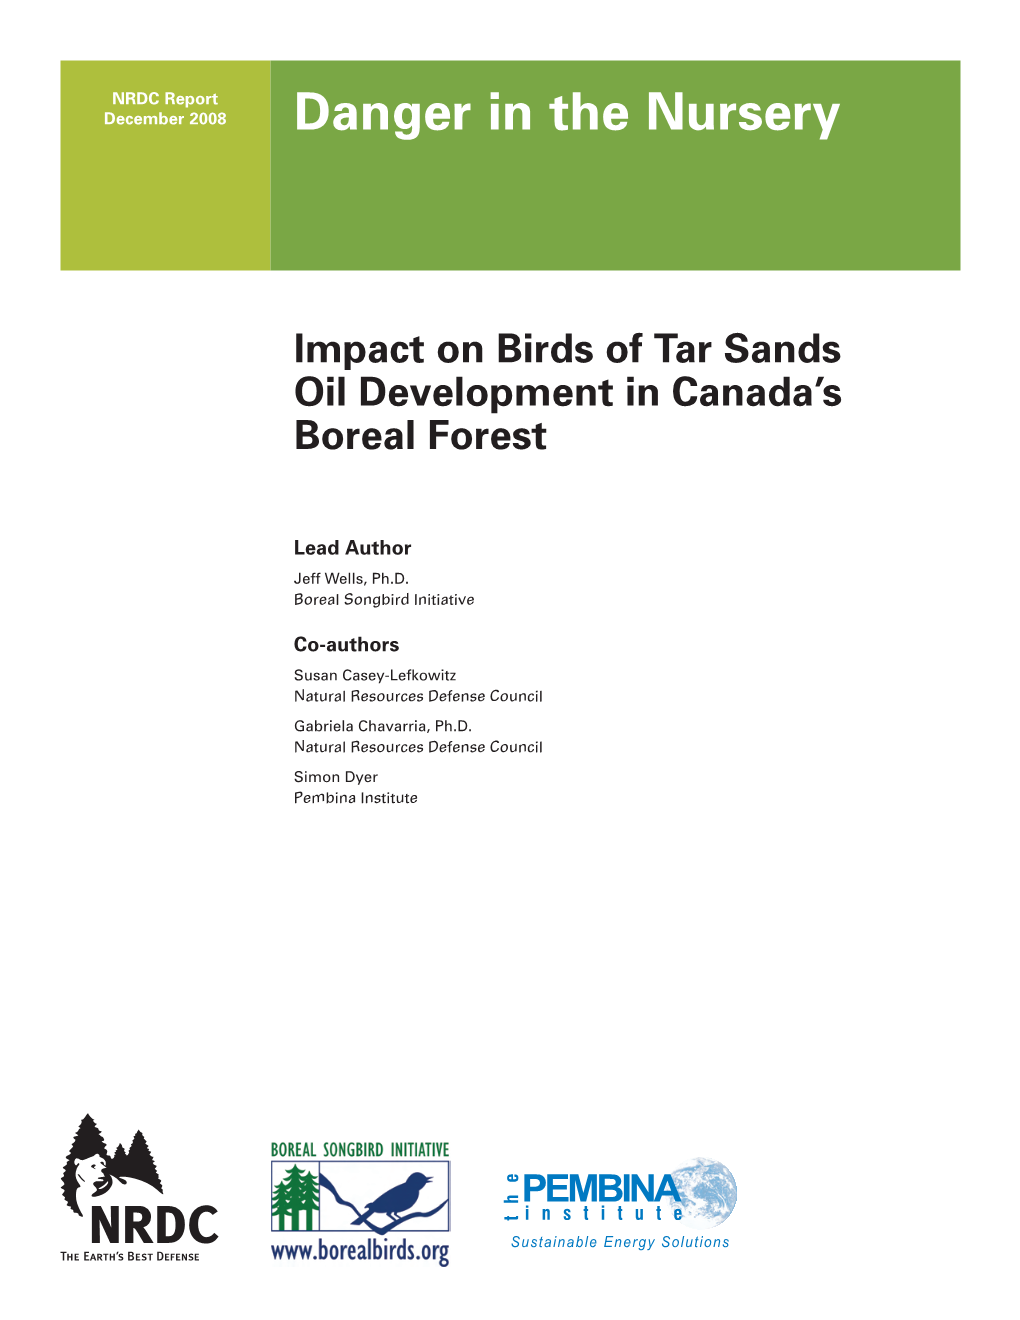 Impact of Tar Sands Oil Development in Canada's